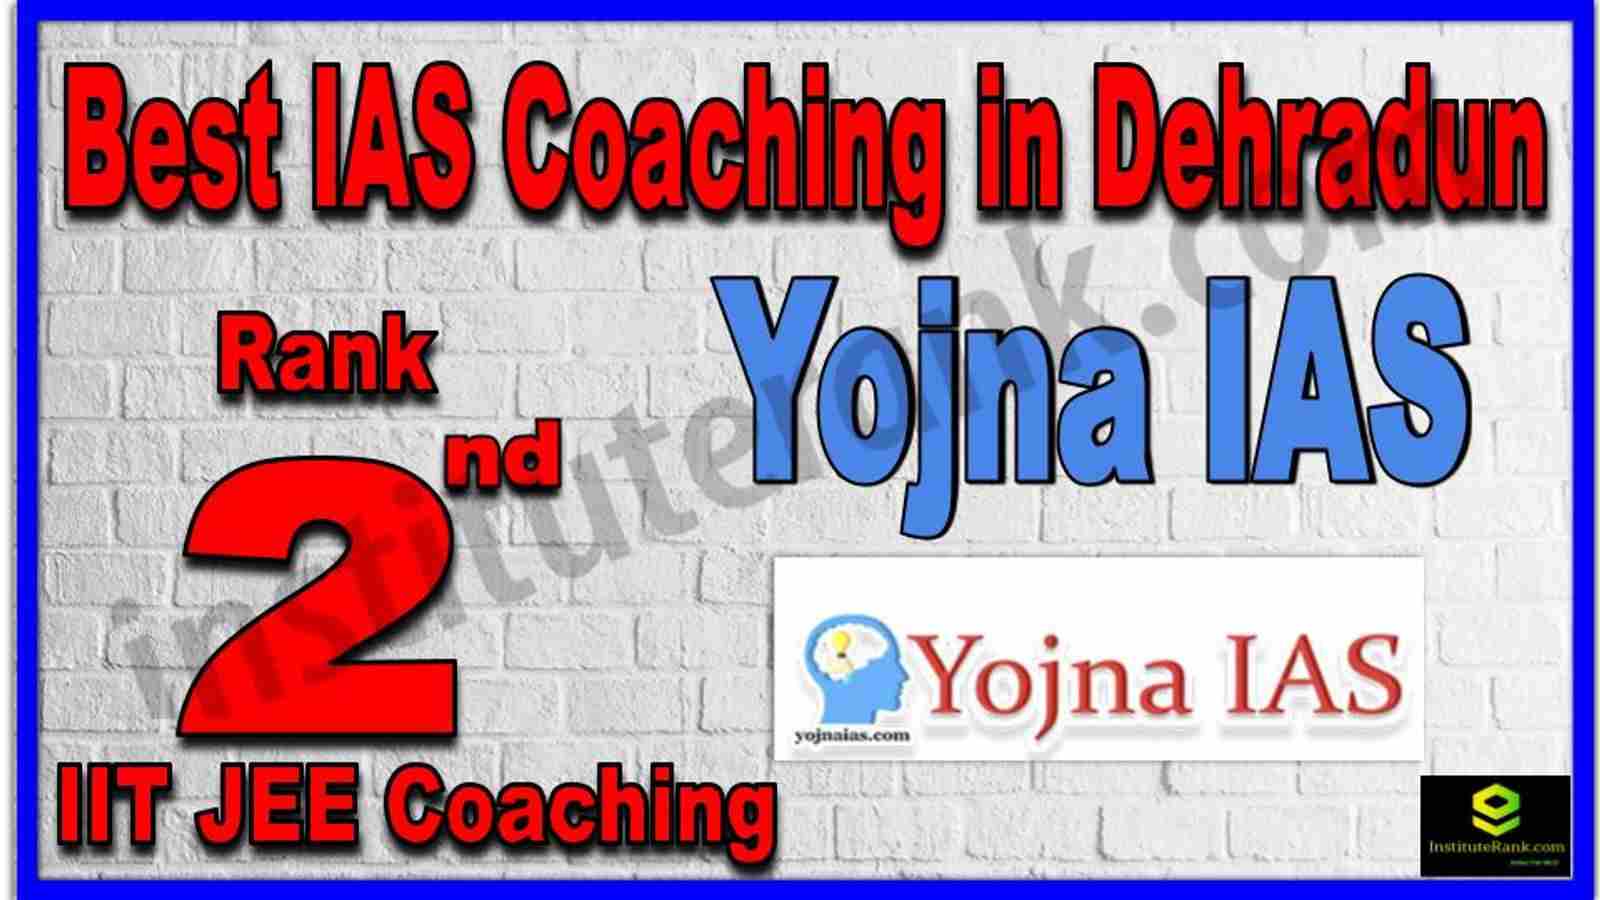 Rank 2nd Best IAS Coaching in Dehradun